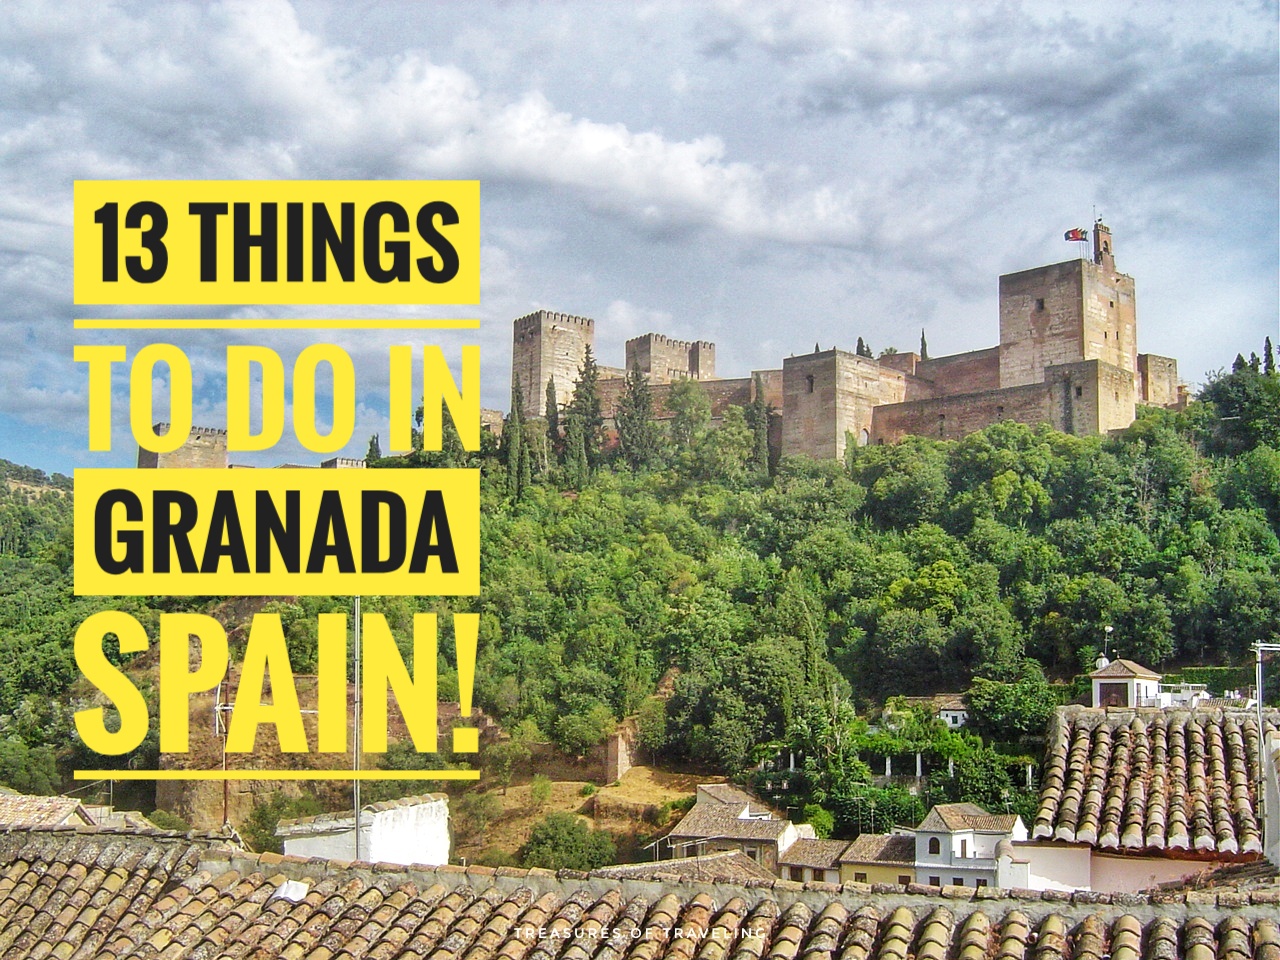 13 Things to do in Granada Spain!